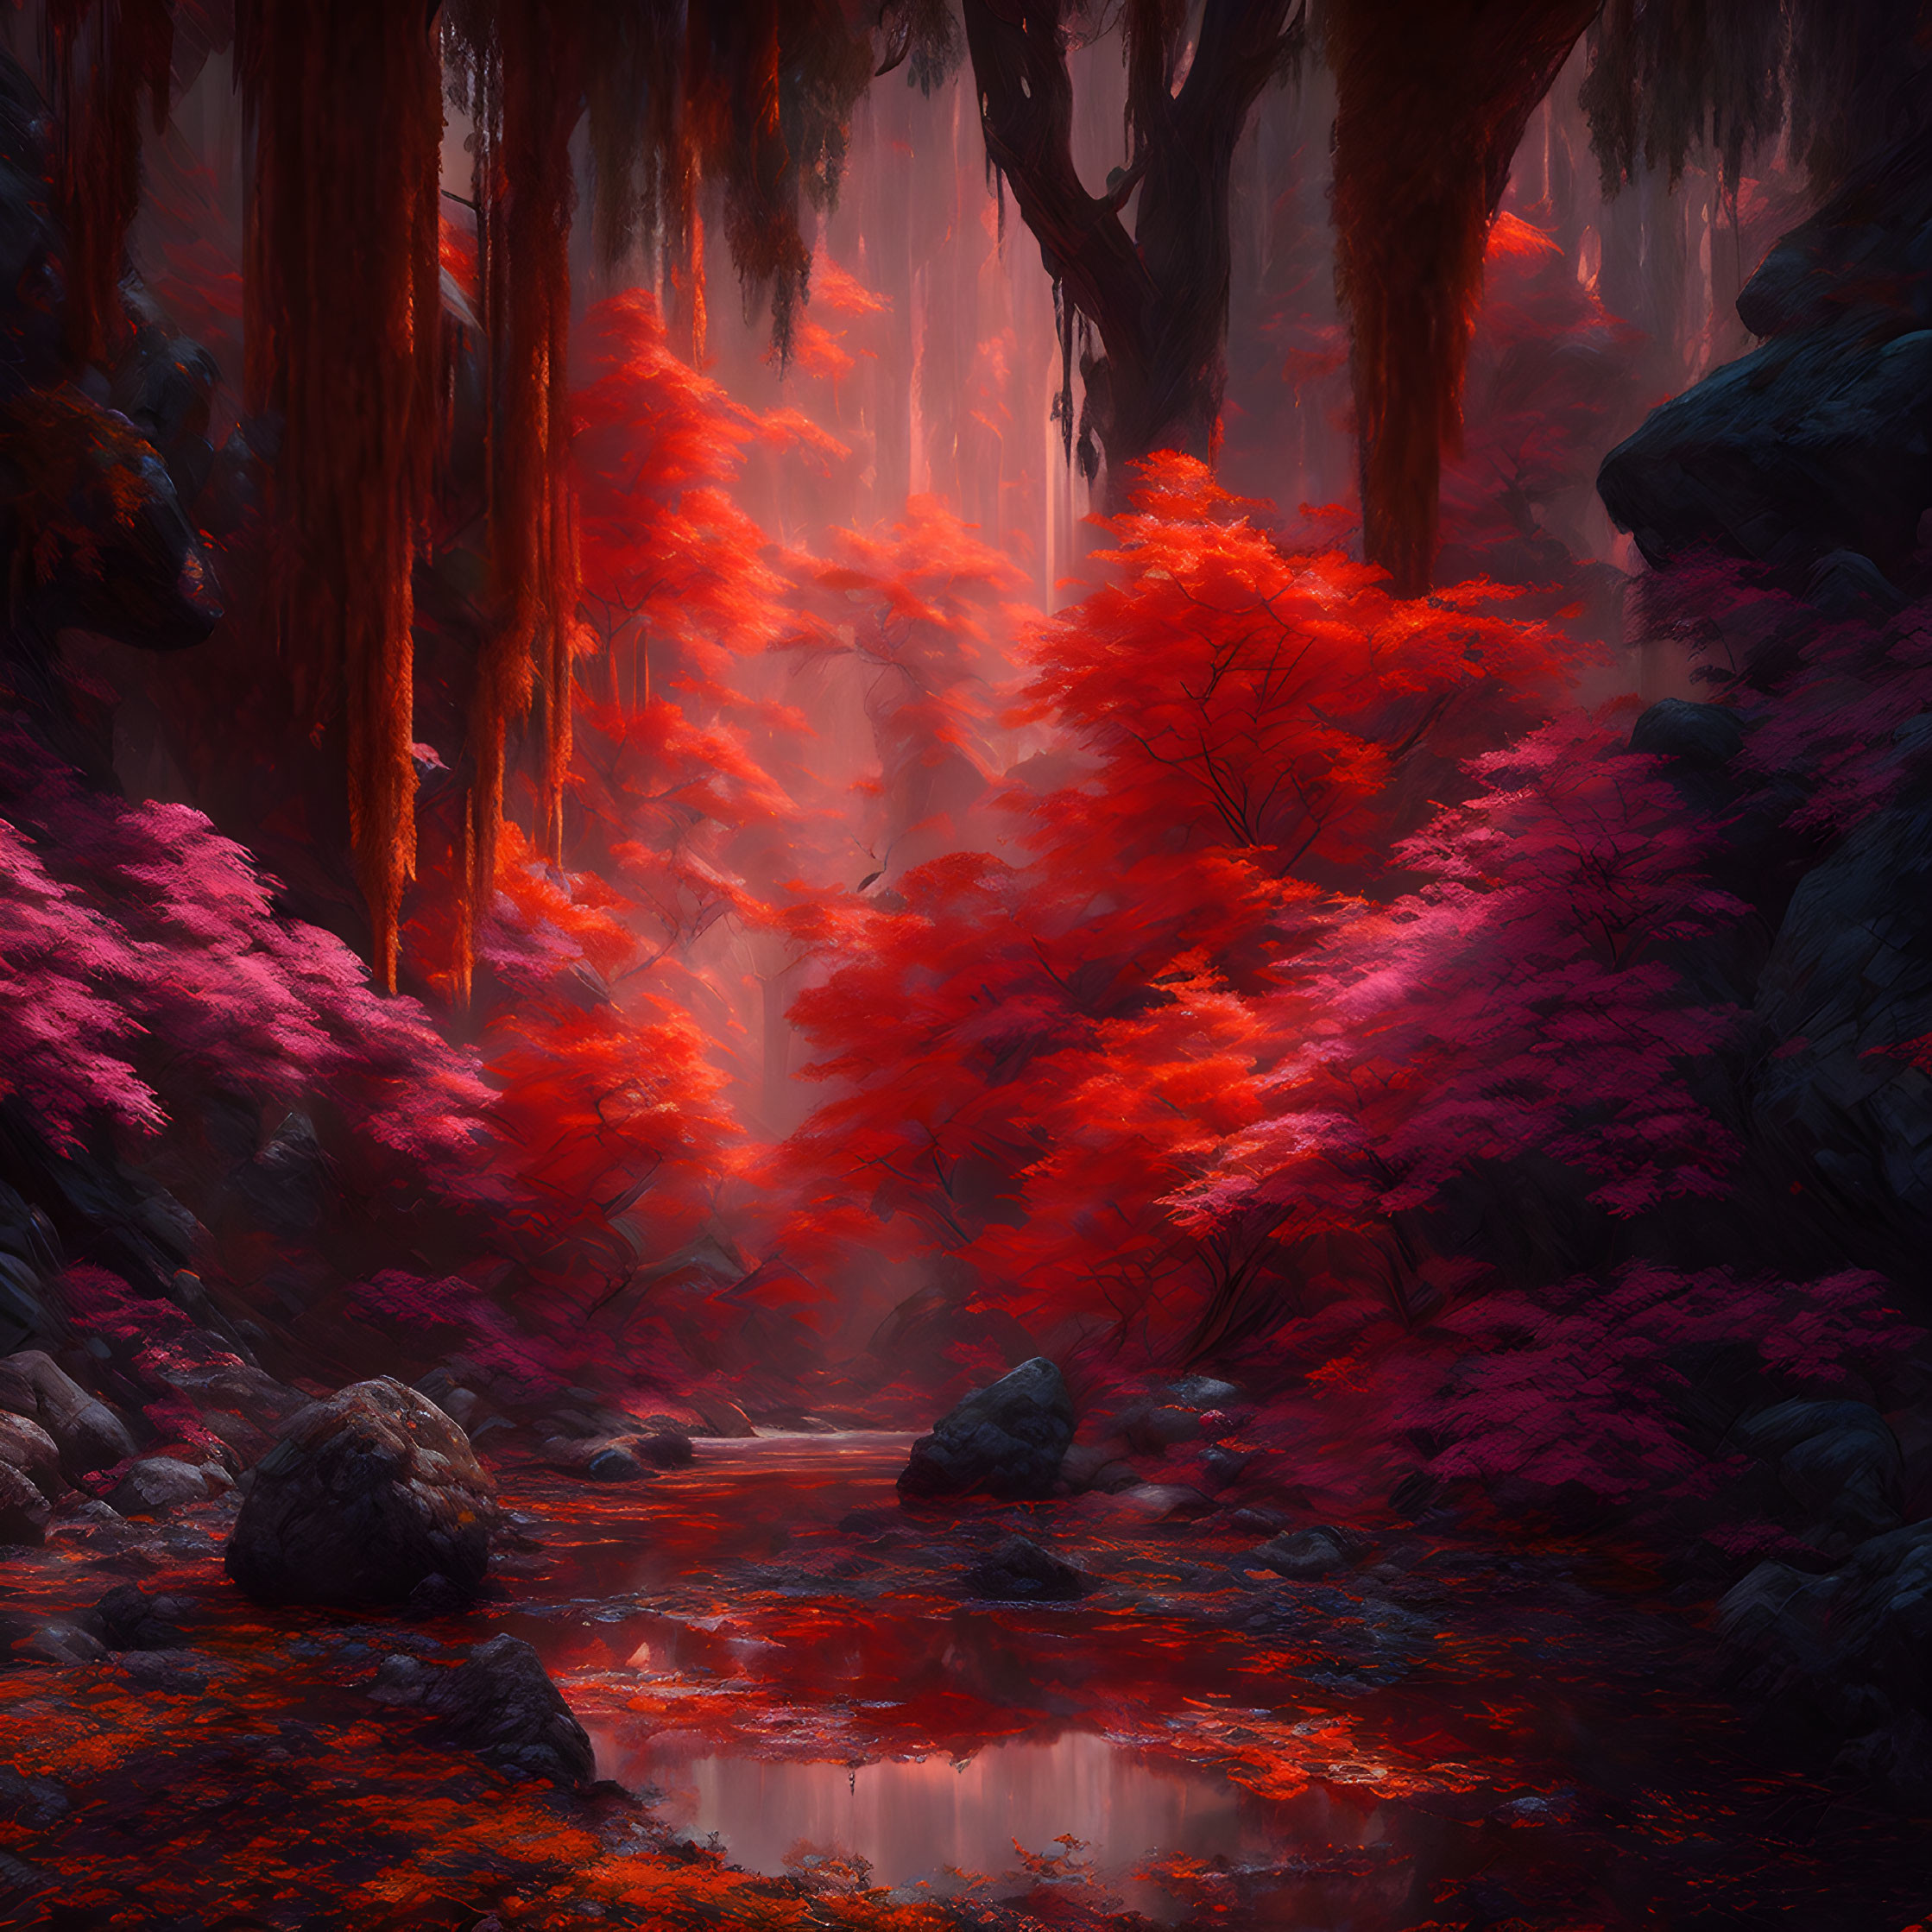 Mystical forest digital art: vibrant red foliage, misty ambiance, serene pond.